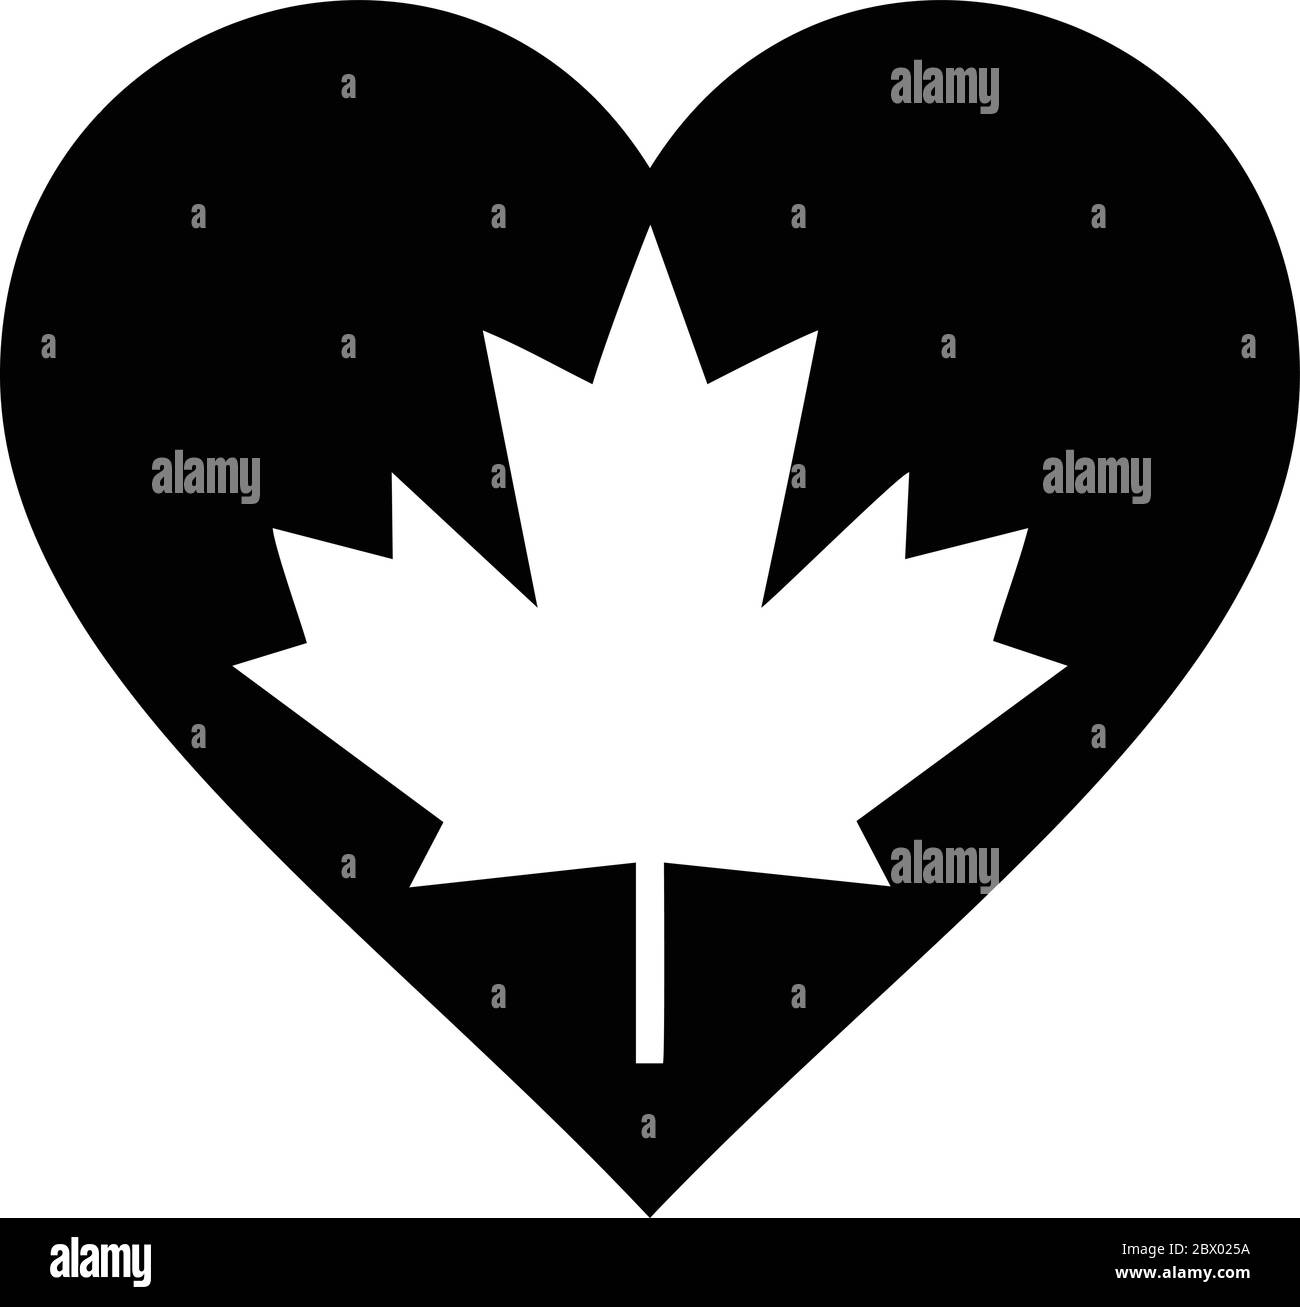 Maple Leaf Heart An Illustration Of A Maple Leaf Heart Symbol Stock